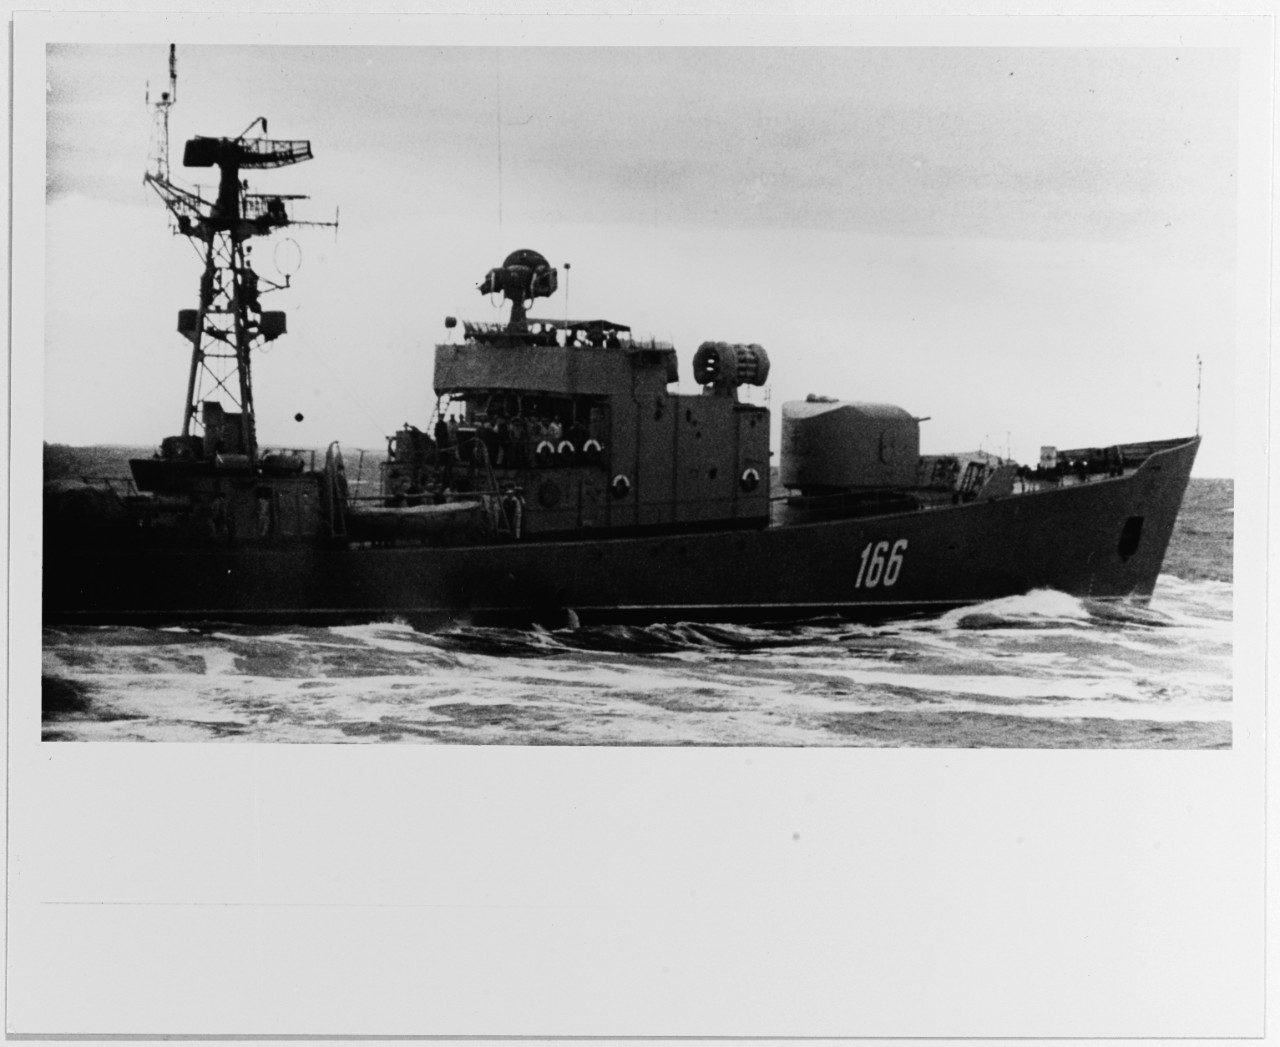 Mirka-class ocean escort in the Baltic Sea